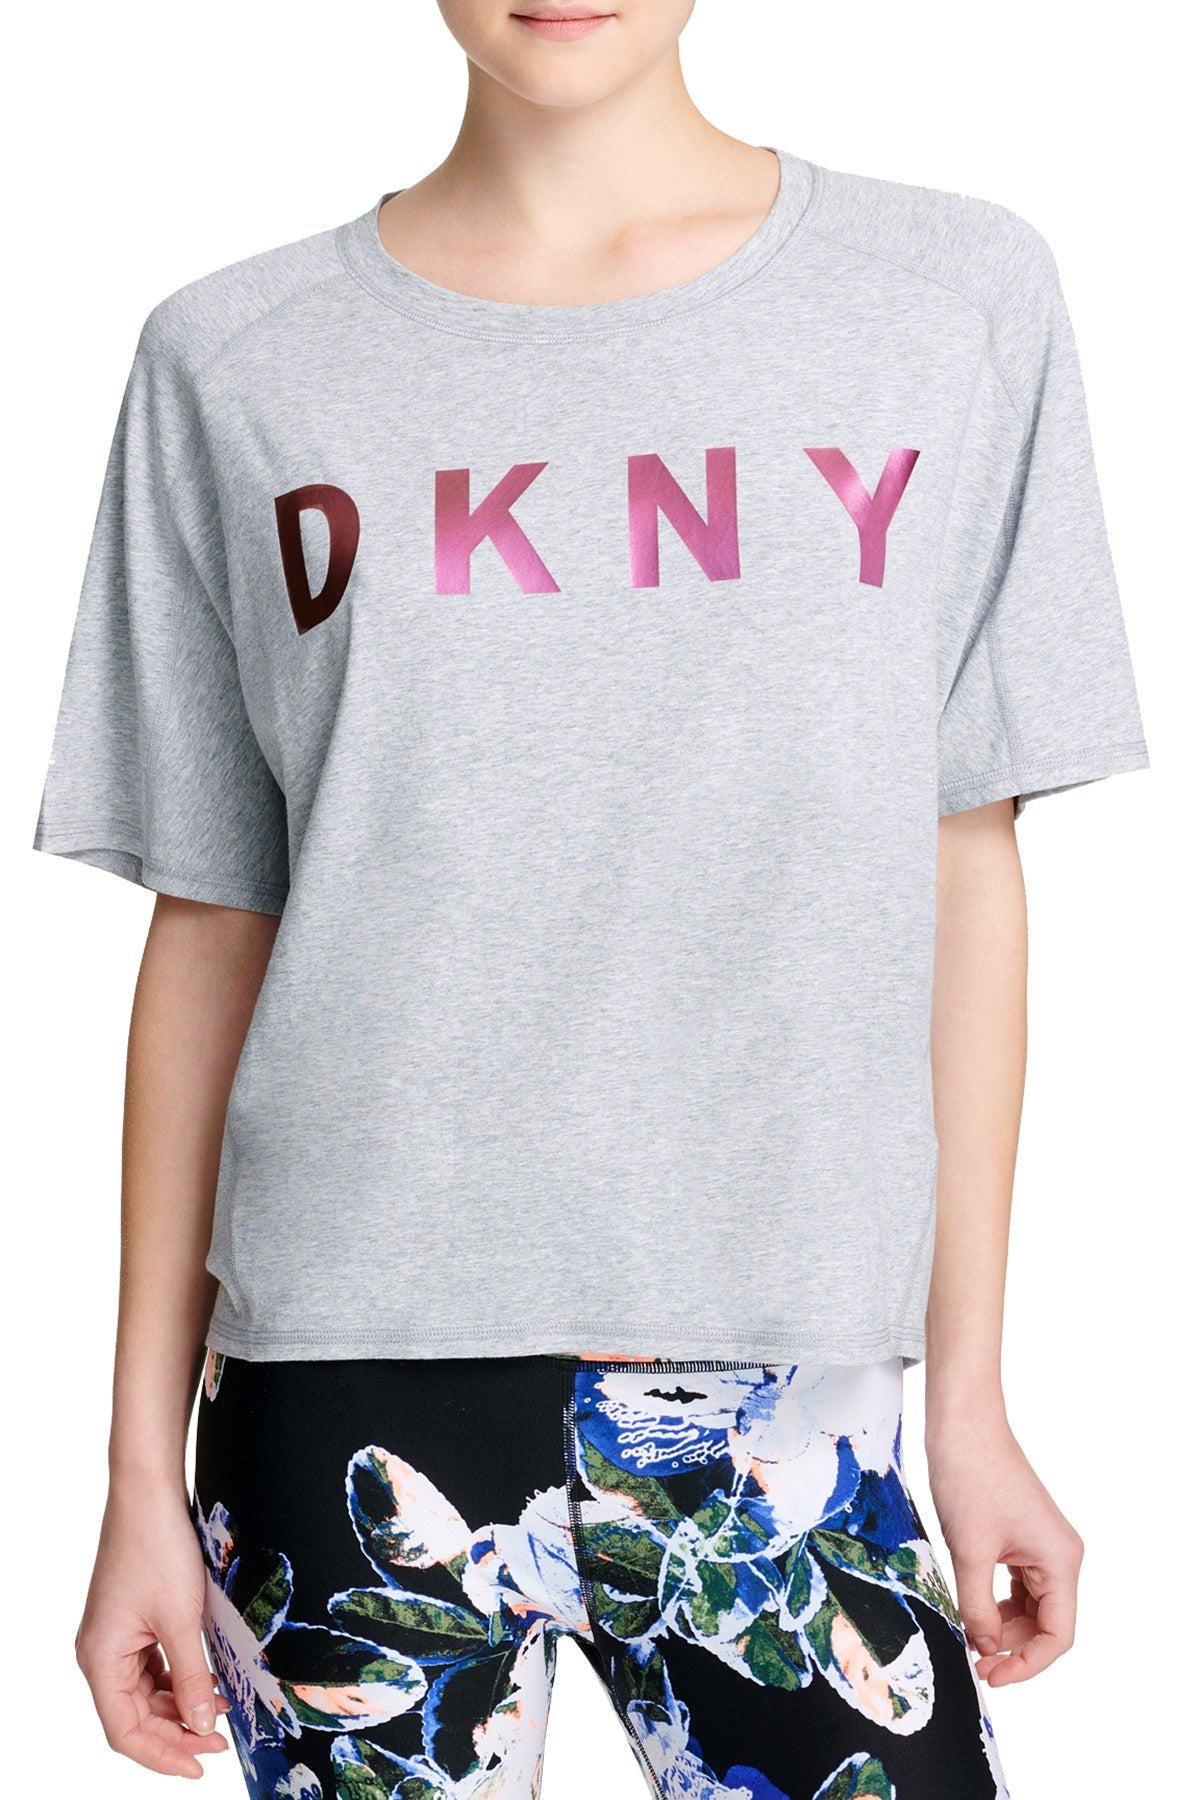 DKNY Sport Pearl Grey Heather/Plum Chameleon Sleeveless Relaxed Logo Tee